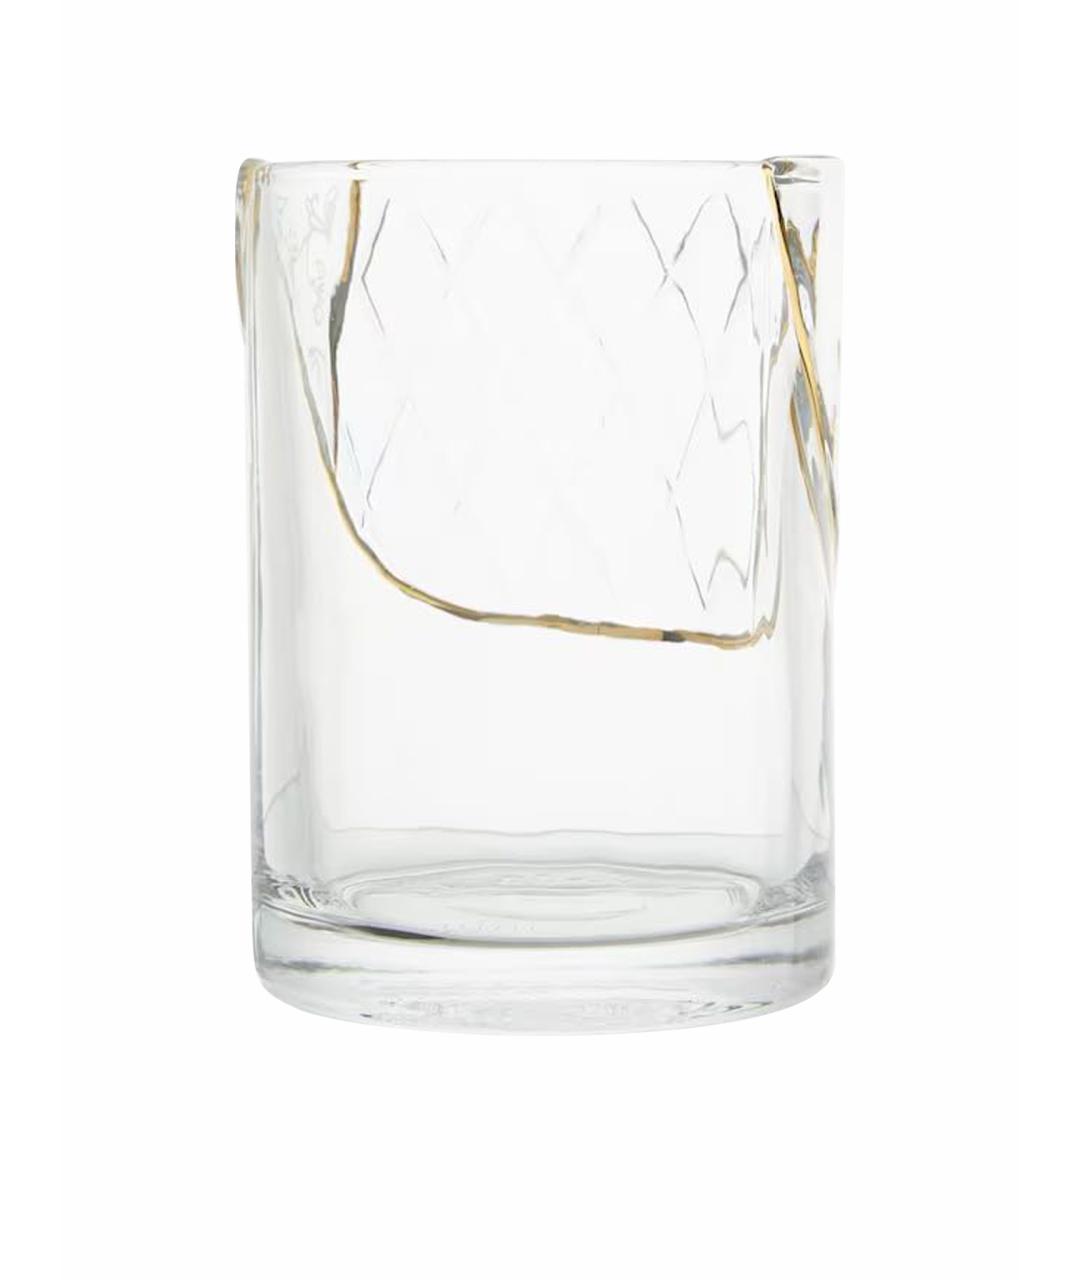 Seletti Стеклянный бокал для воды, фото 1